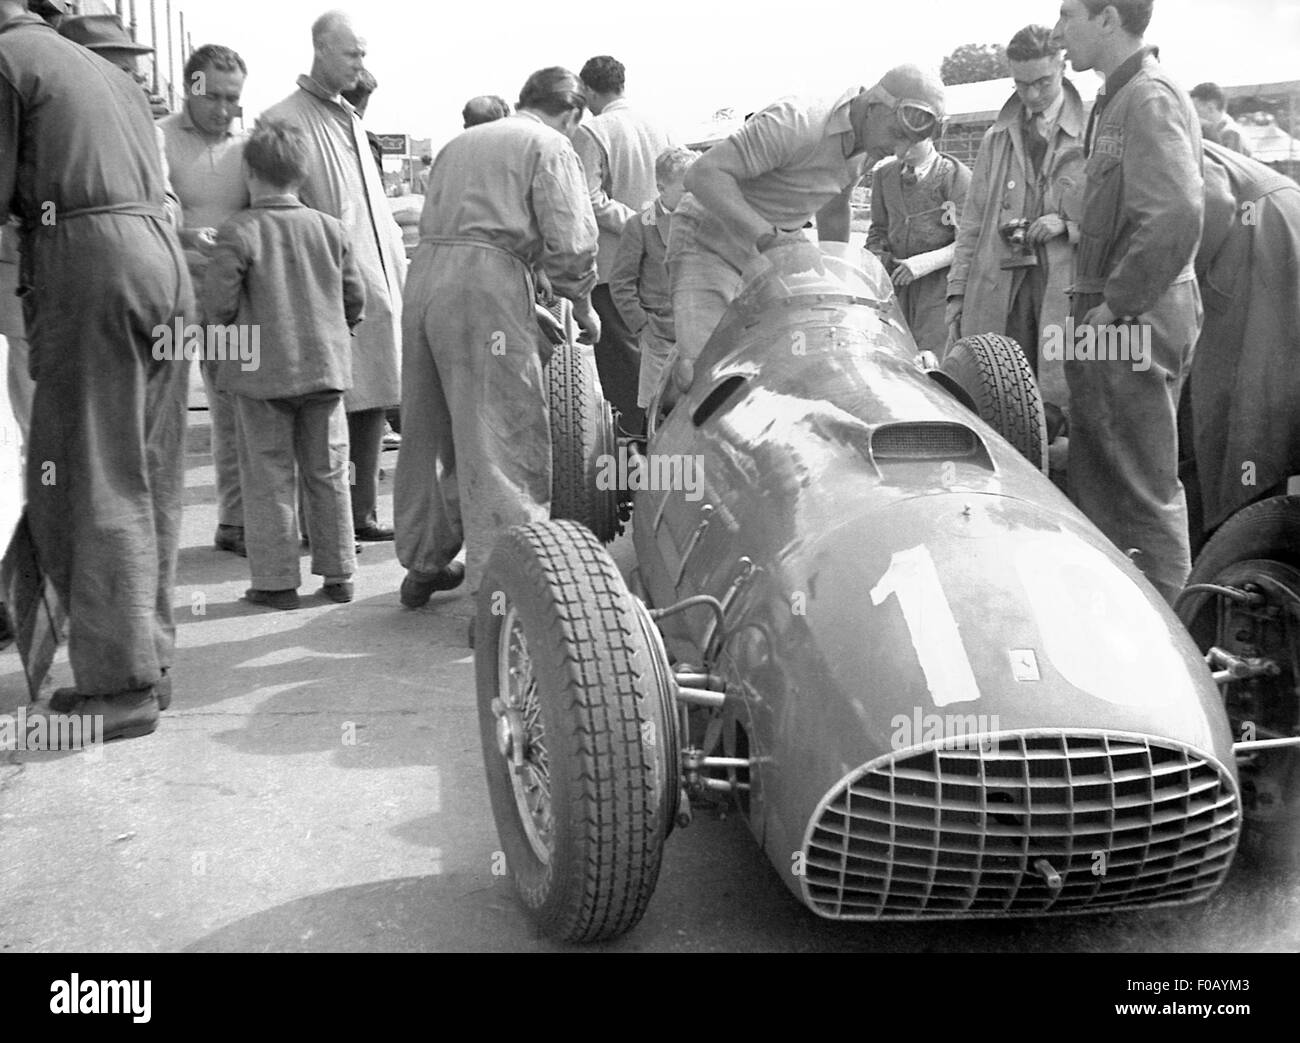 British GP at Silverstone 1951 Stock Photo